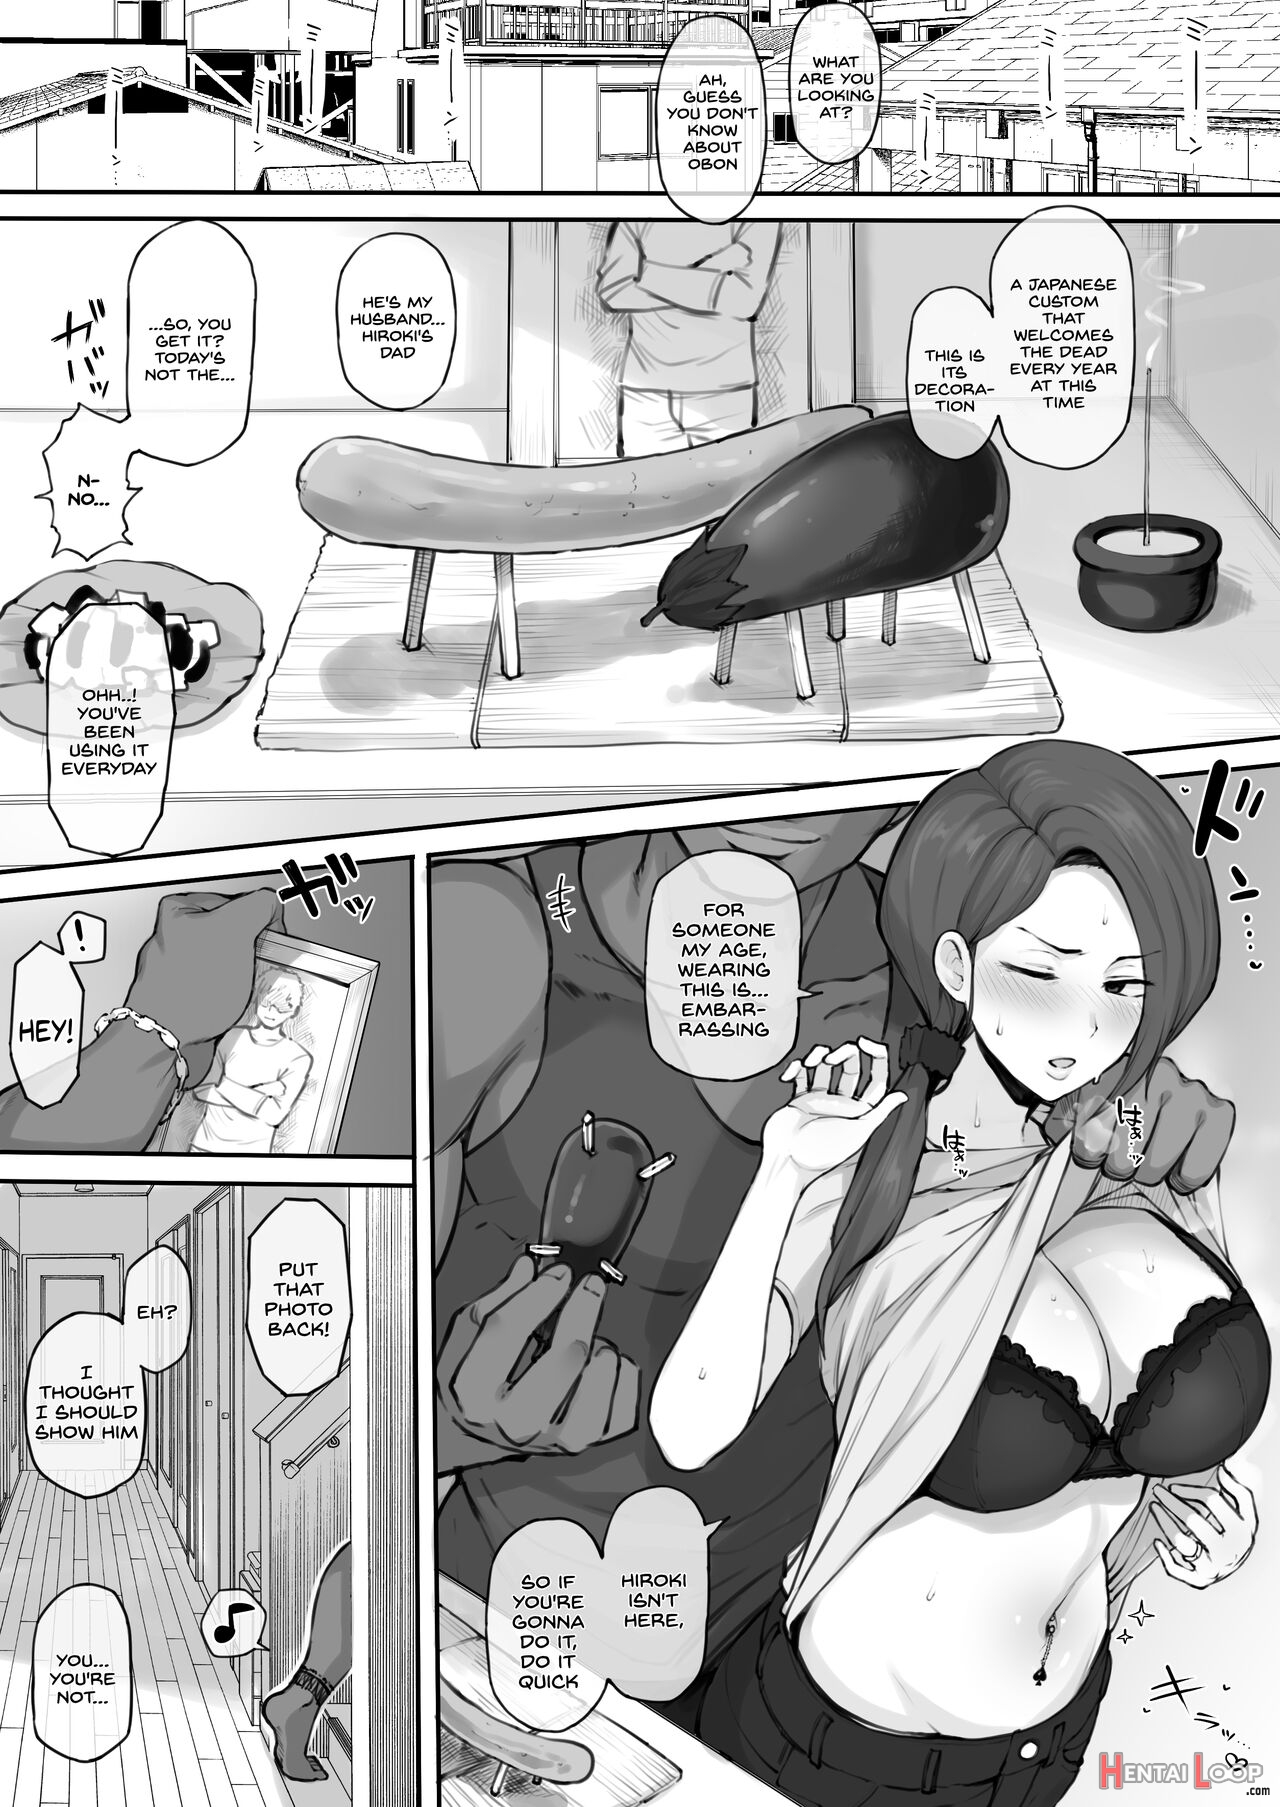 Kokujin No Tenkousei Ntr Ru Chapters 1-6 Part 1 Plus Bonus Chapter: Stolen Mother’s Breasts page 19